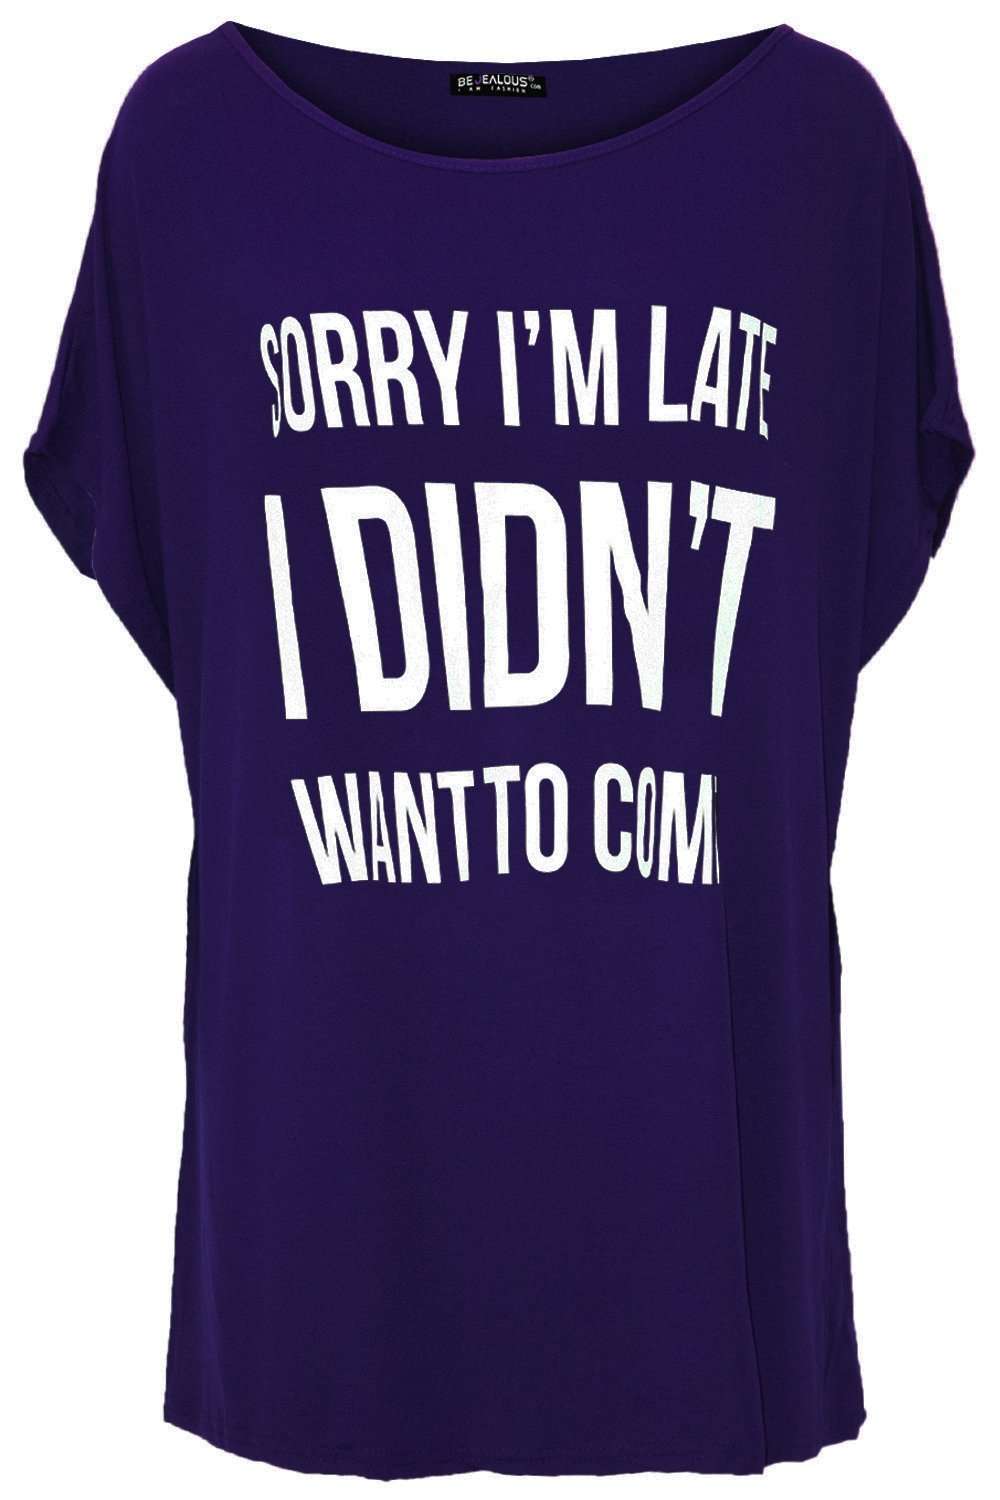 MIa Off Shoulder Slogan Print Oversize Tshirt - bejealous-com